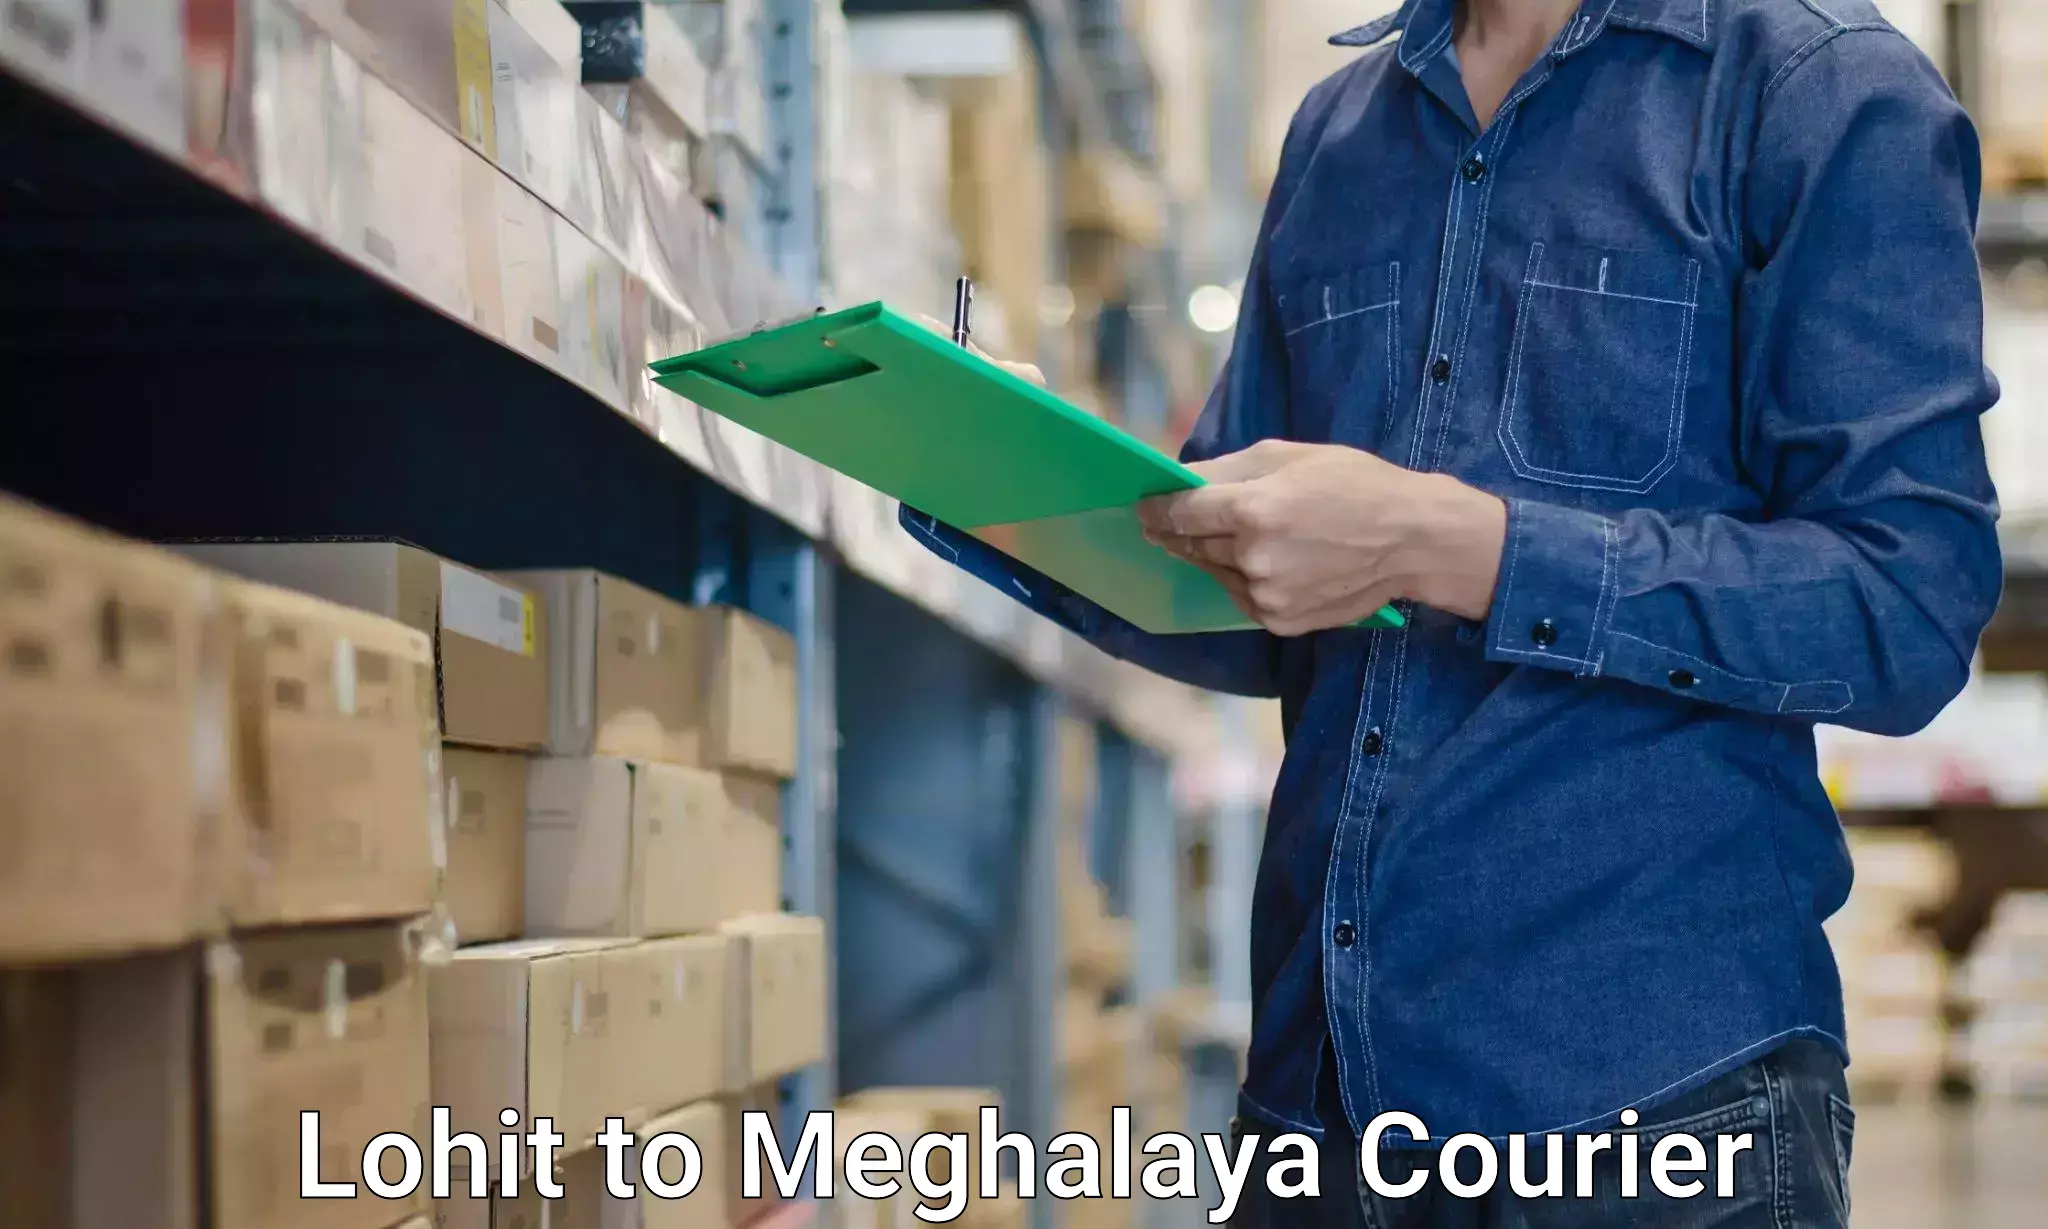 Professional moving company Lohit to Meghalaya